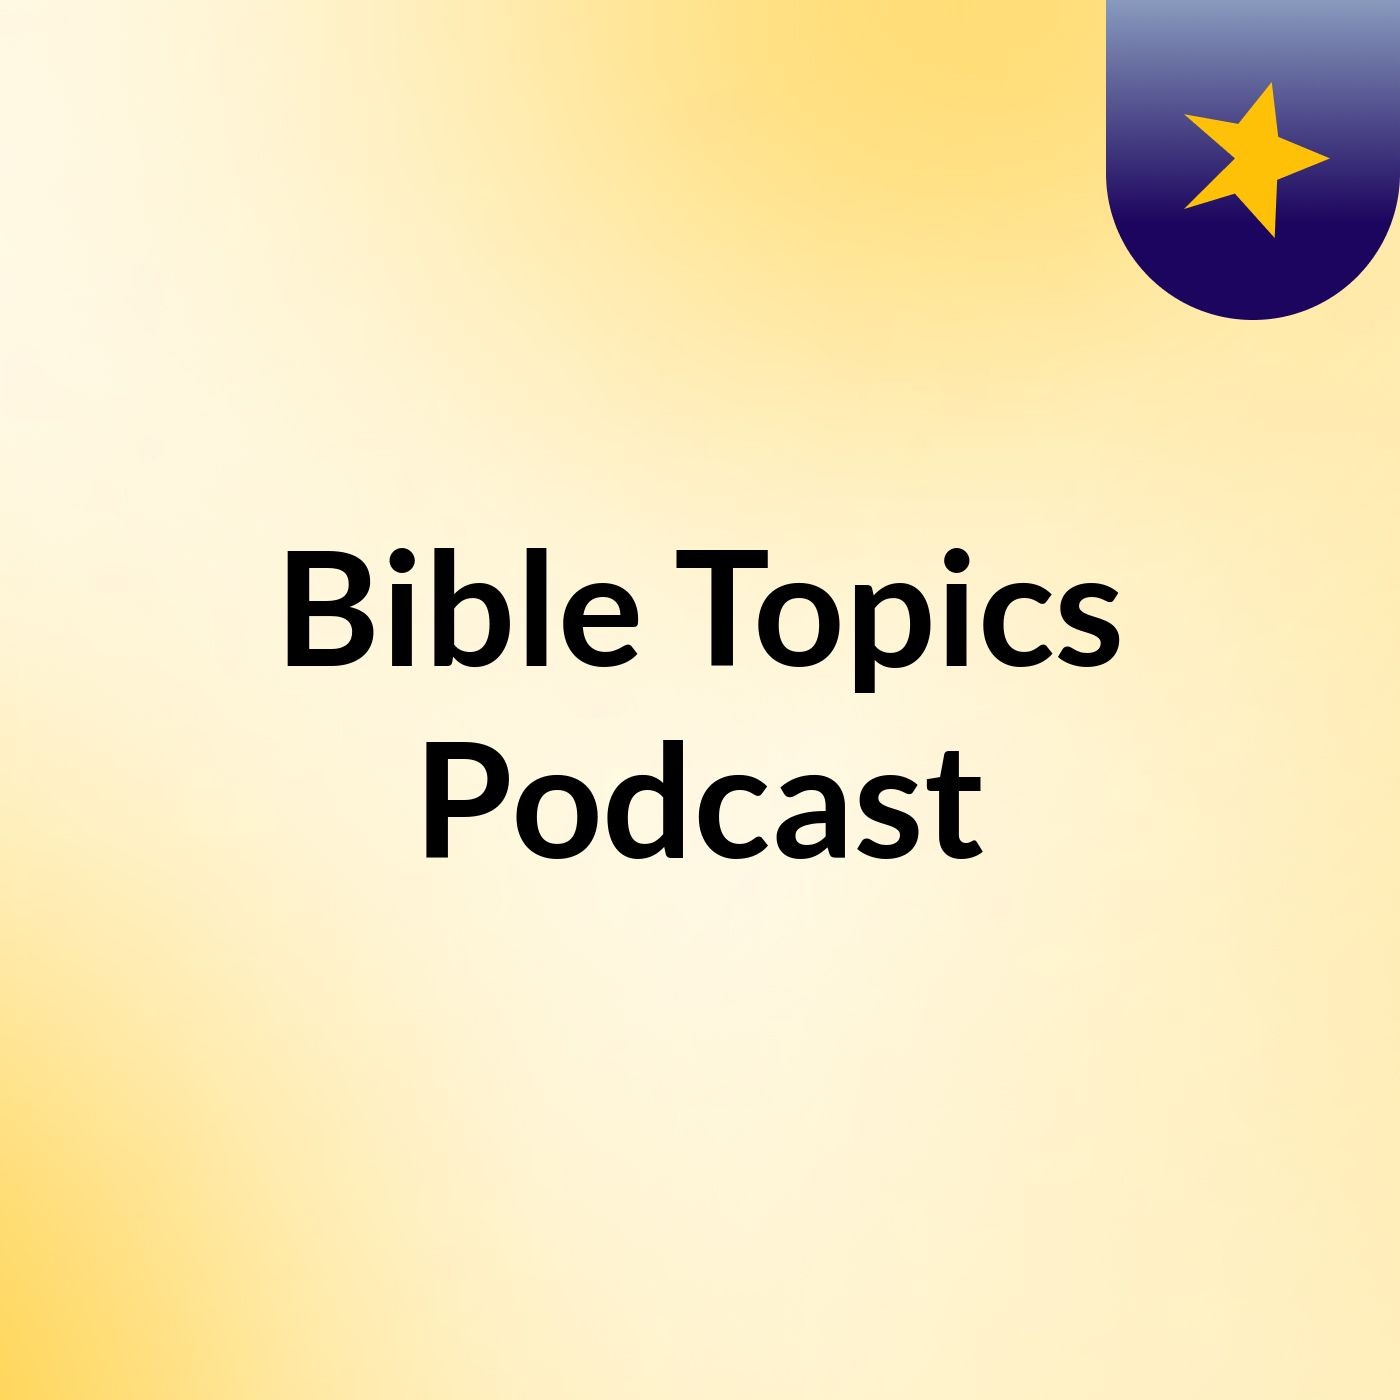 Bible Topics Podcast